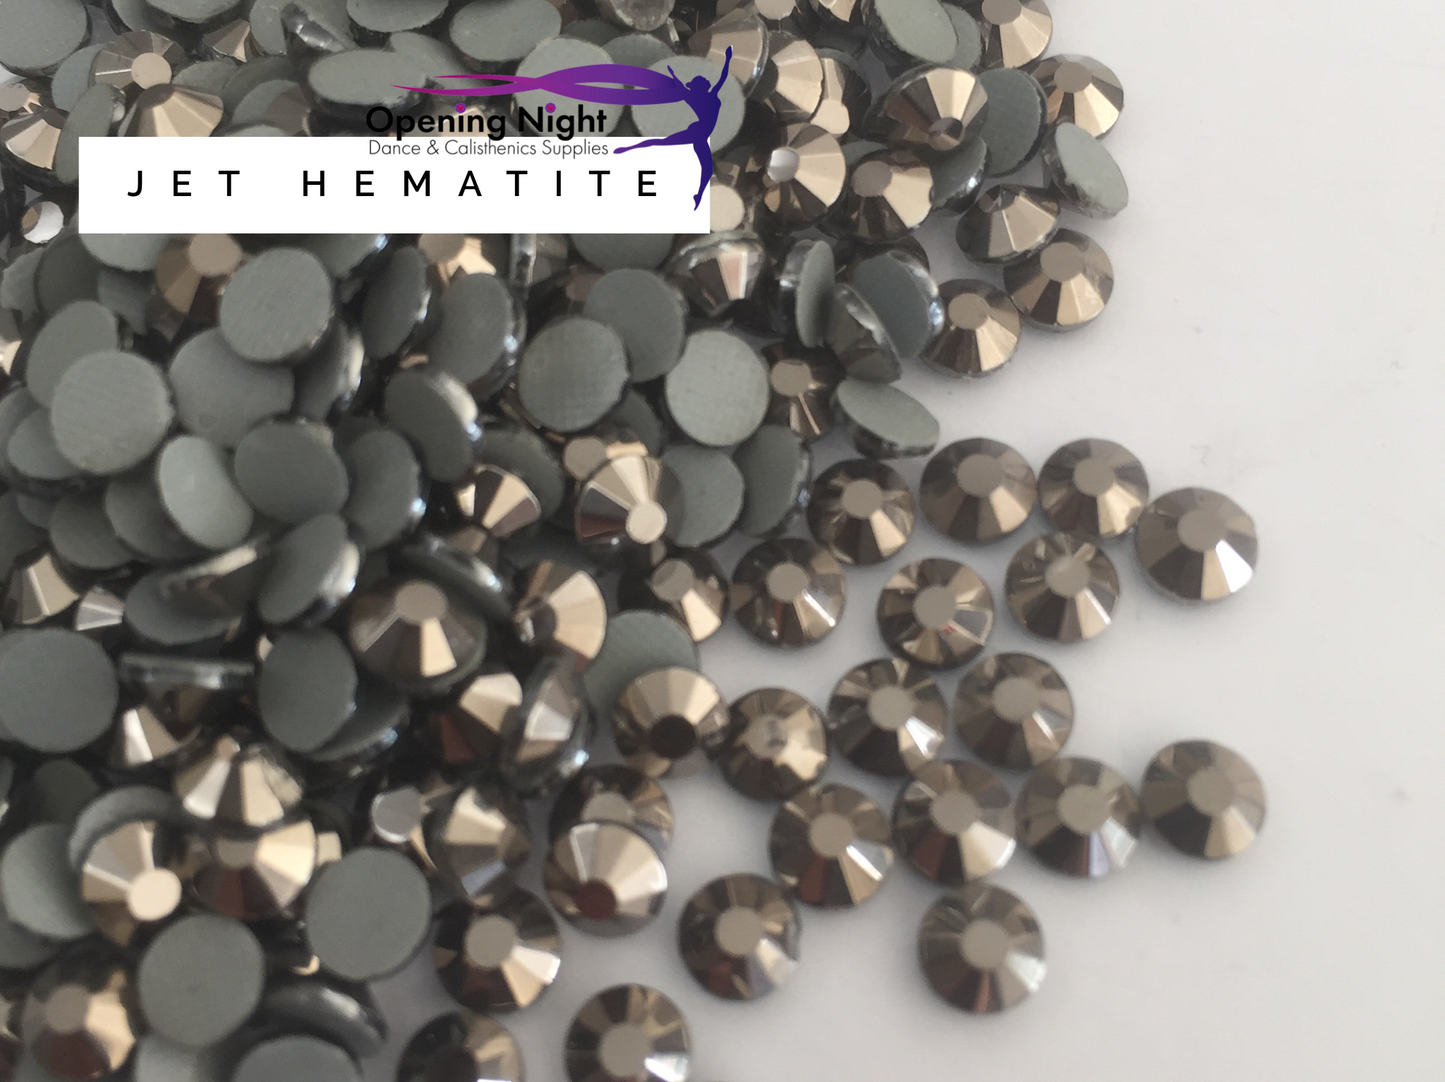 Jet Hematite - Hotfix Diamante AAA Crystals